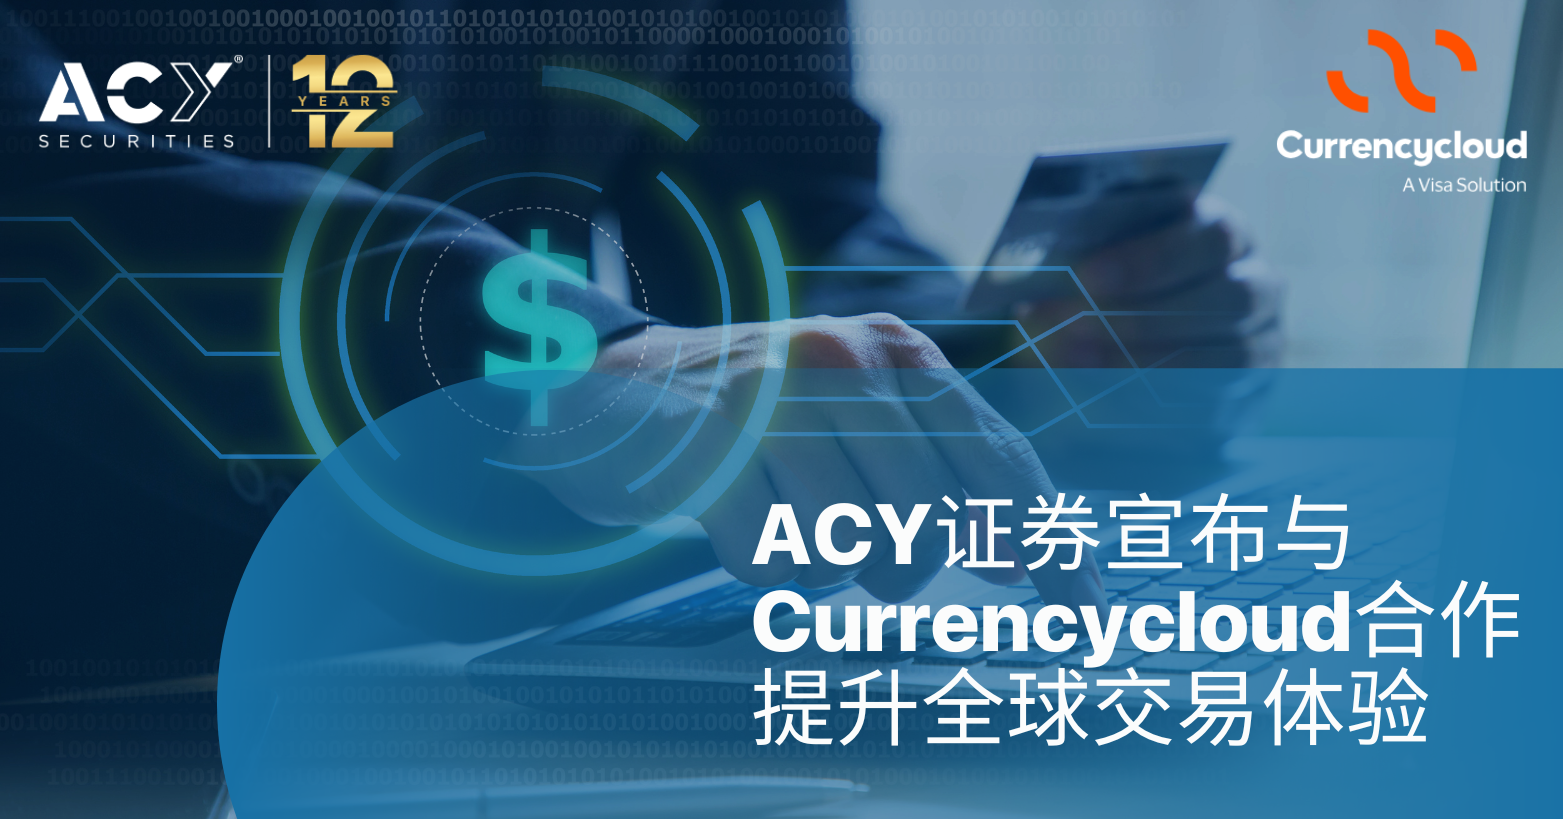 【ACY证券】宣布与Currencycloud合作，提升全球交易体验